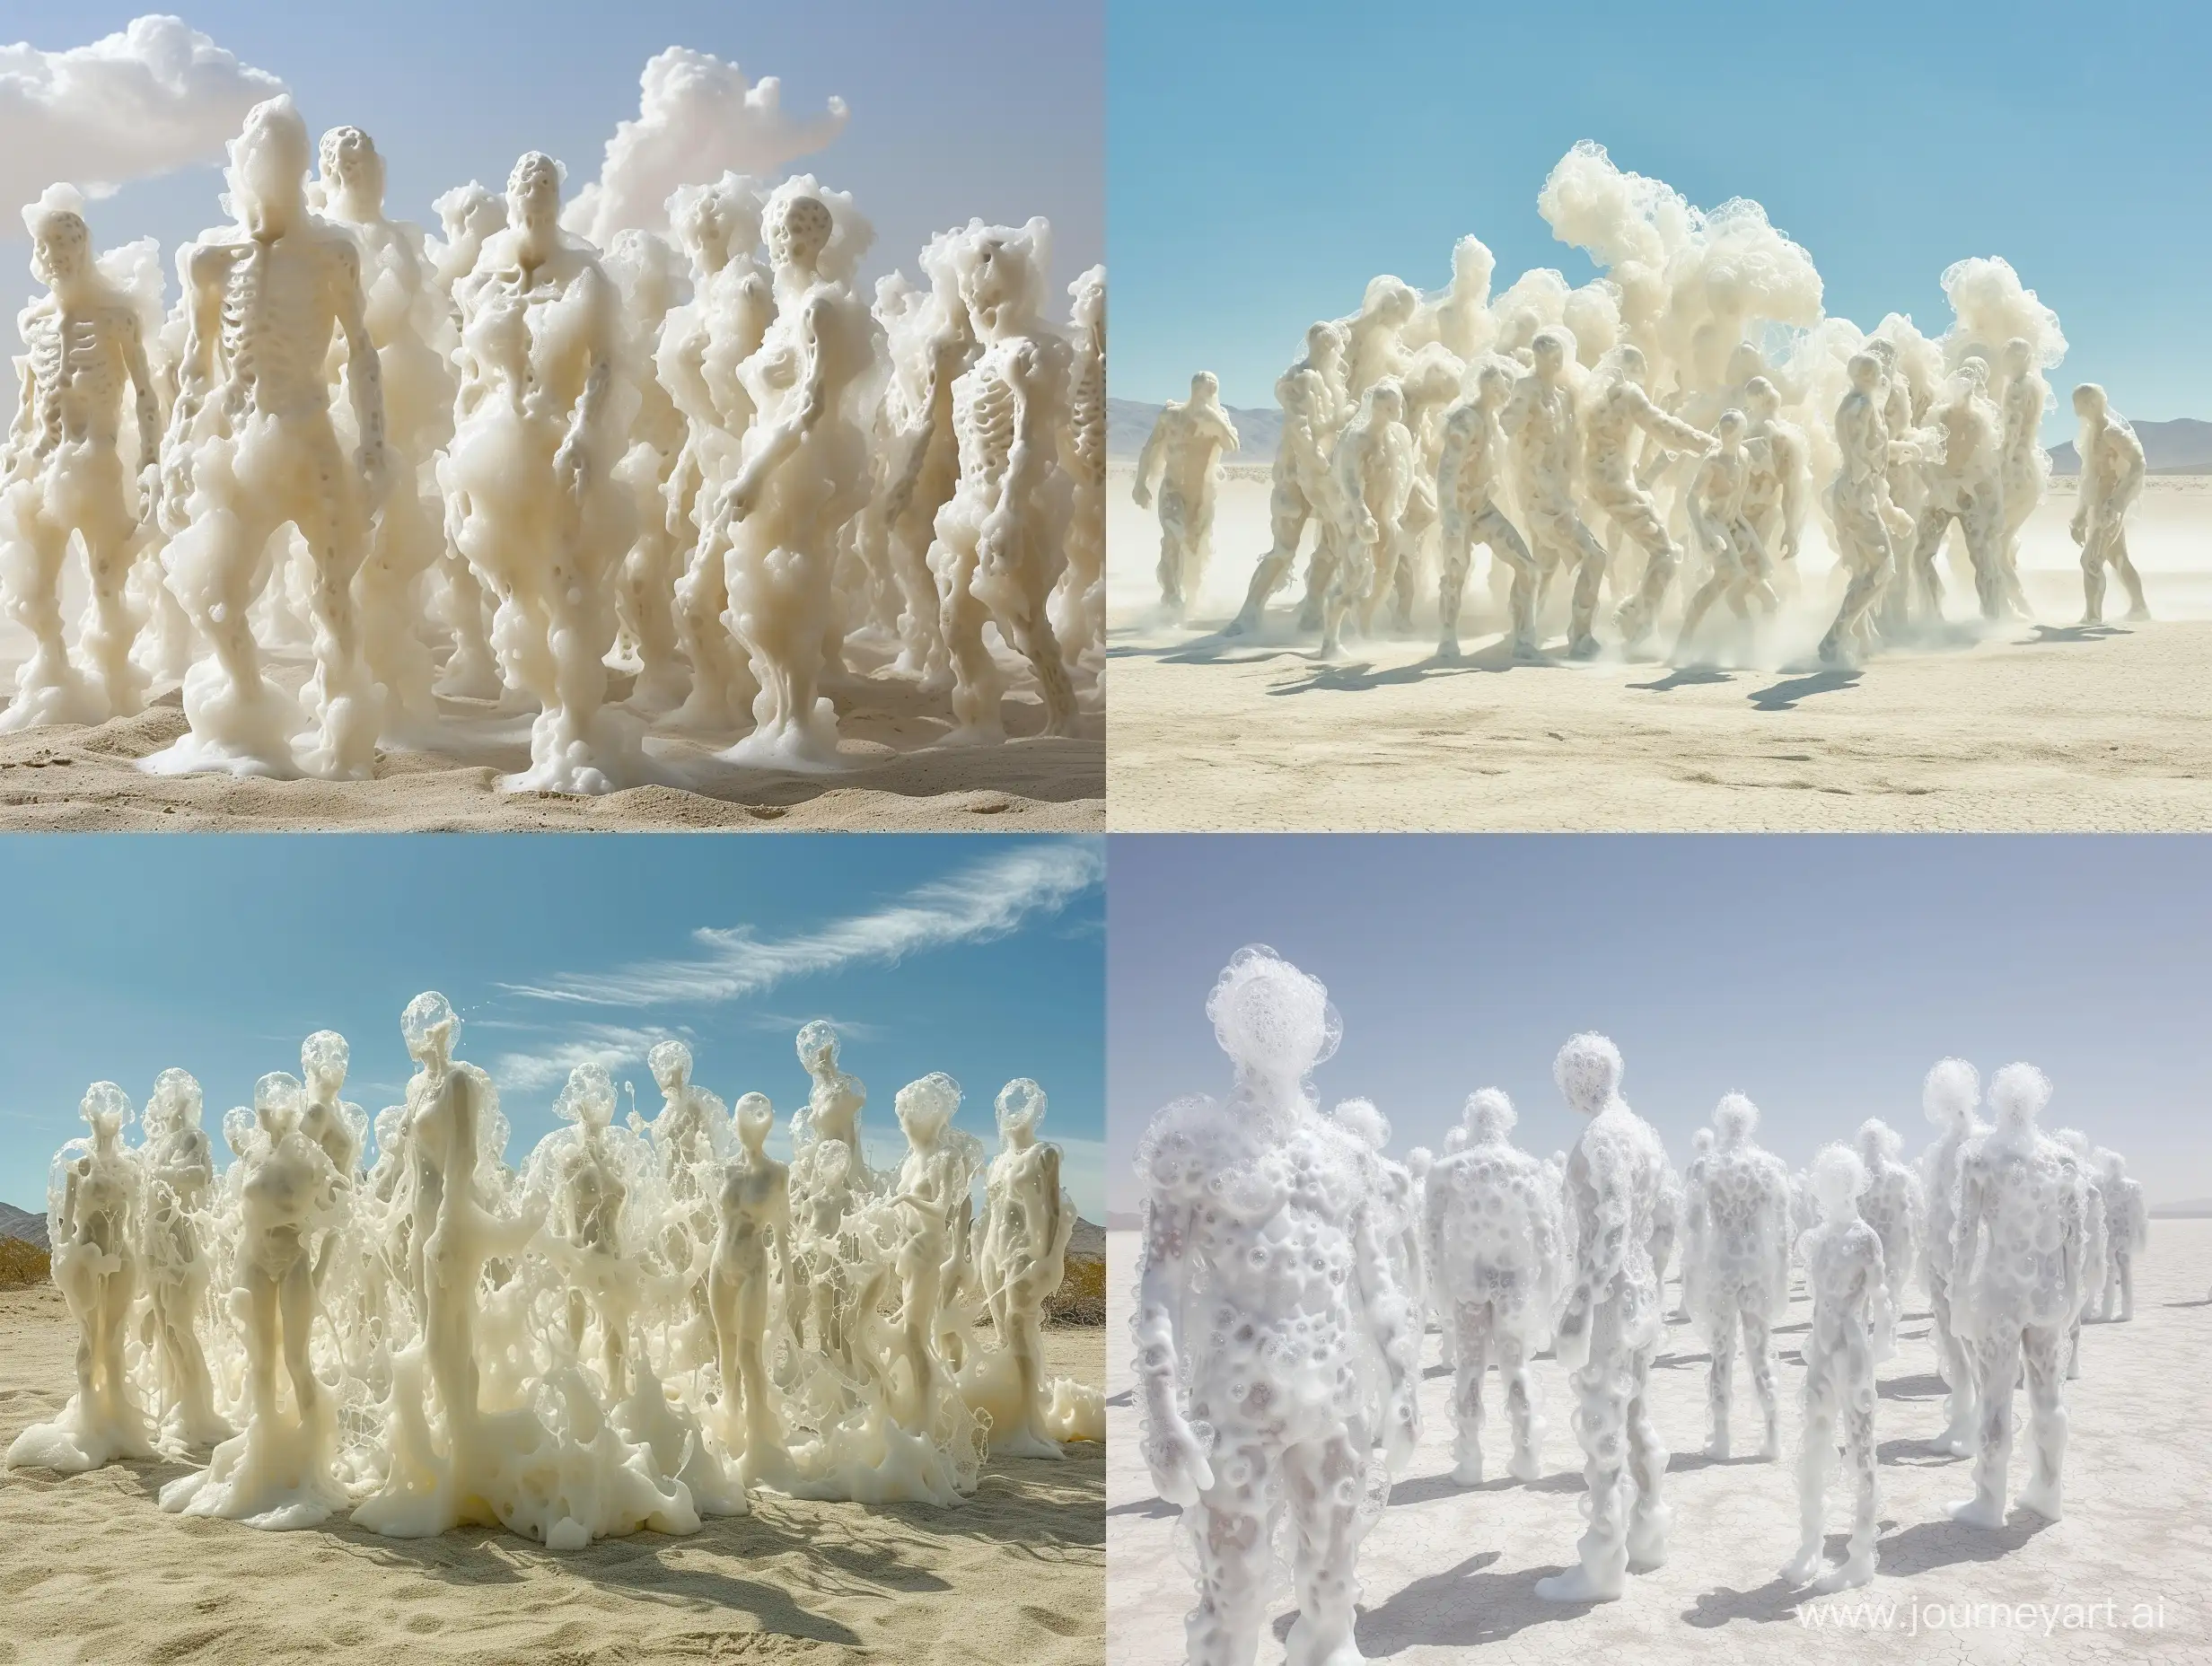 Foamy-Water-Human-Figures-Gathering-in-Desert